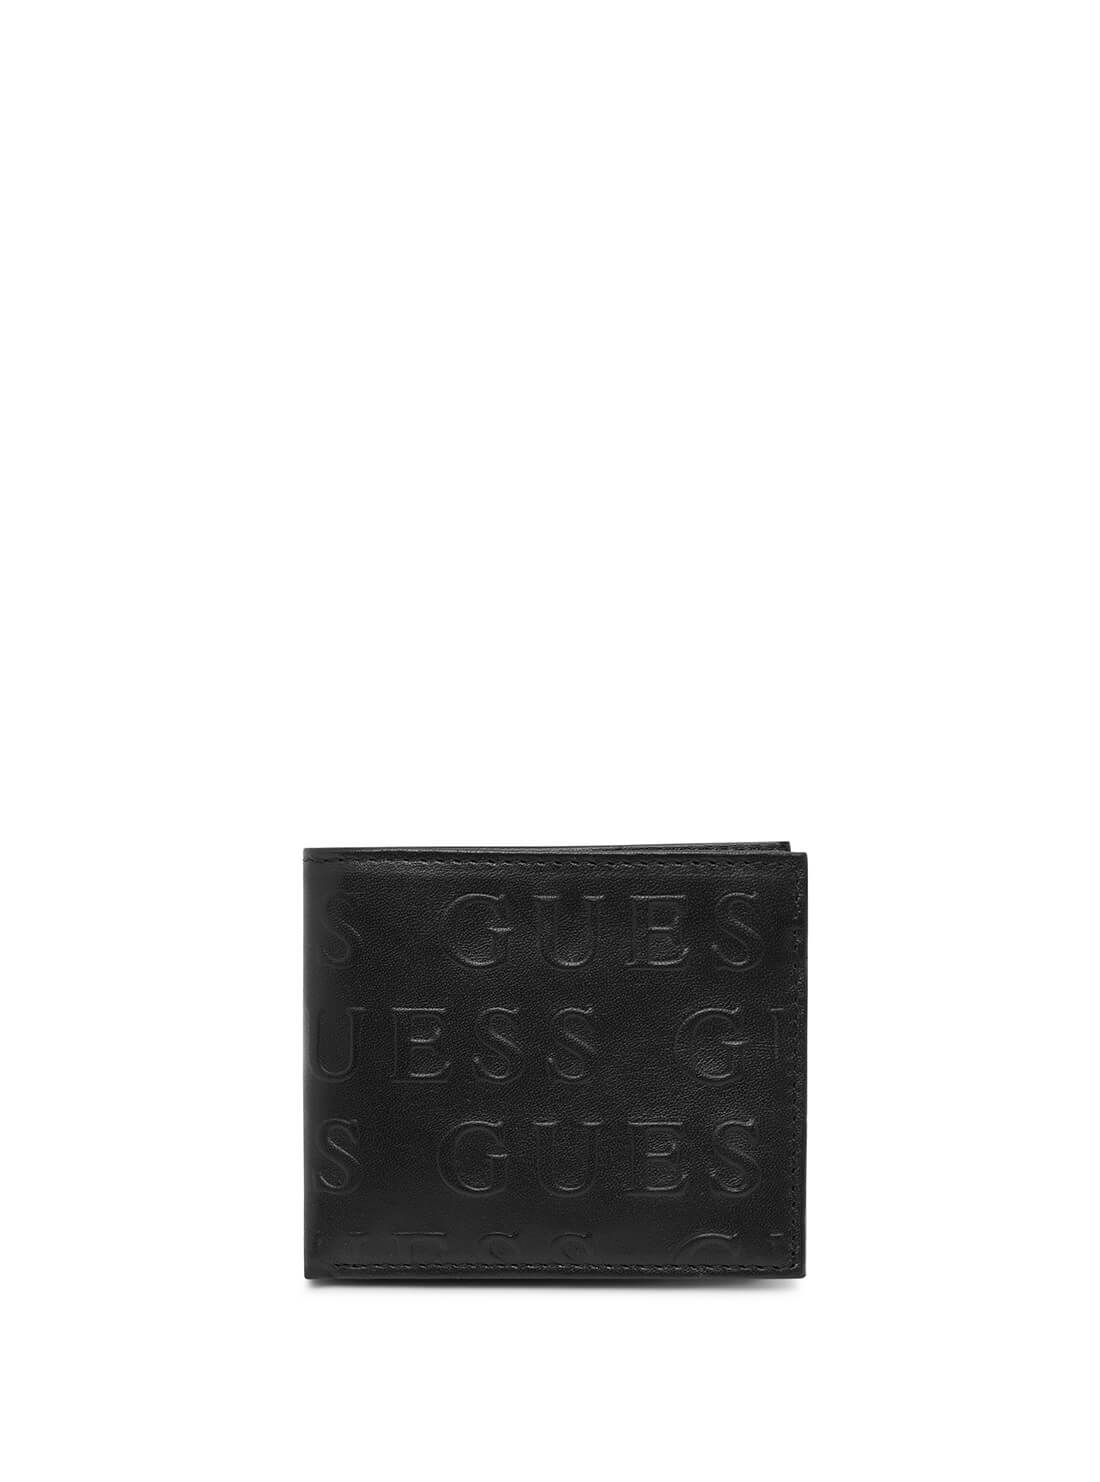 GUESS Men's Black Glenoaks Logo Passcase Wallet 31GUE22094 Front View